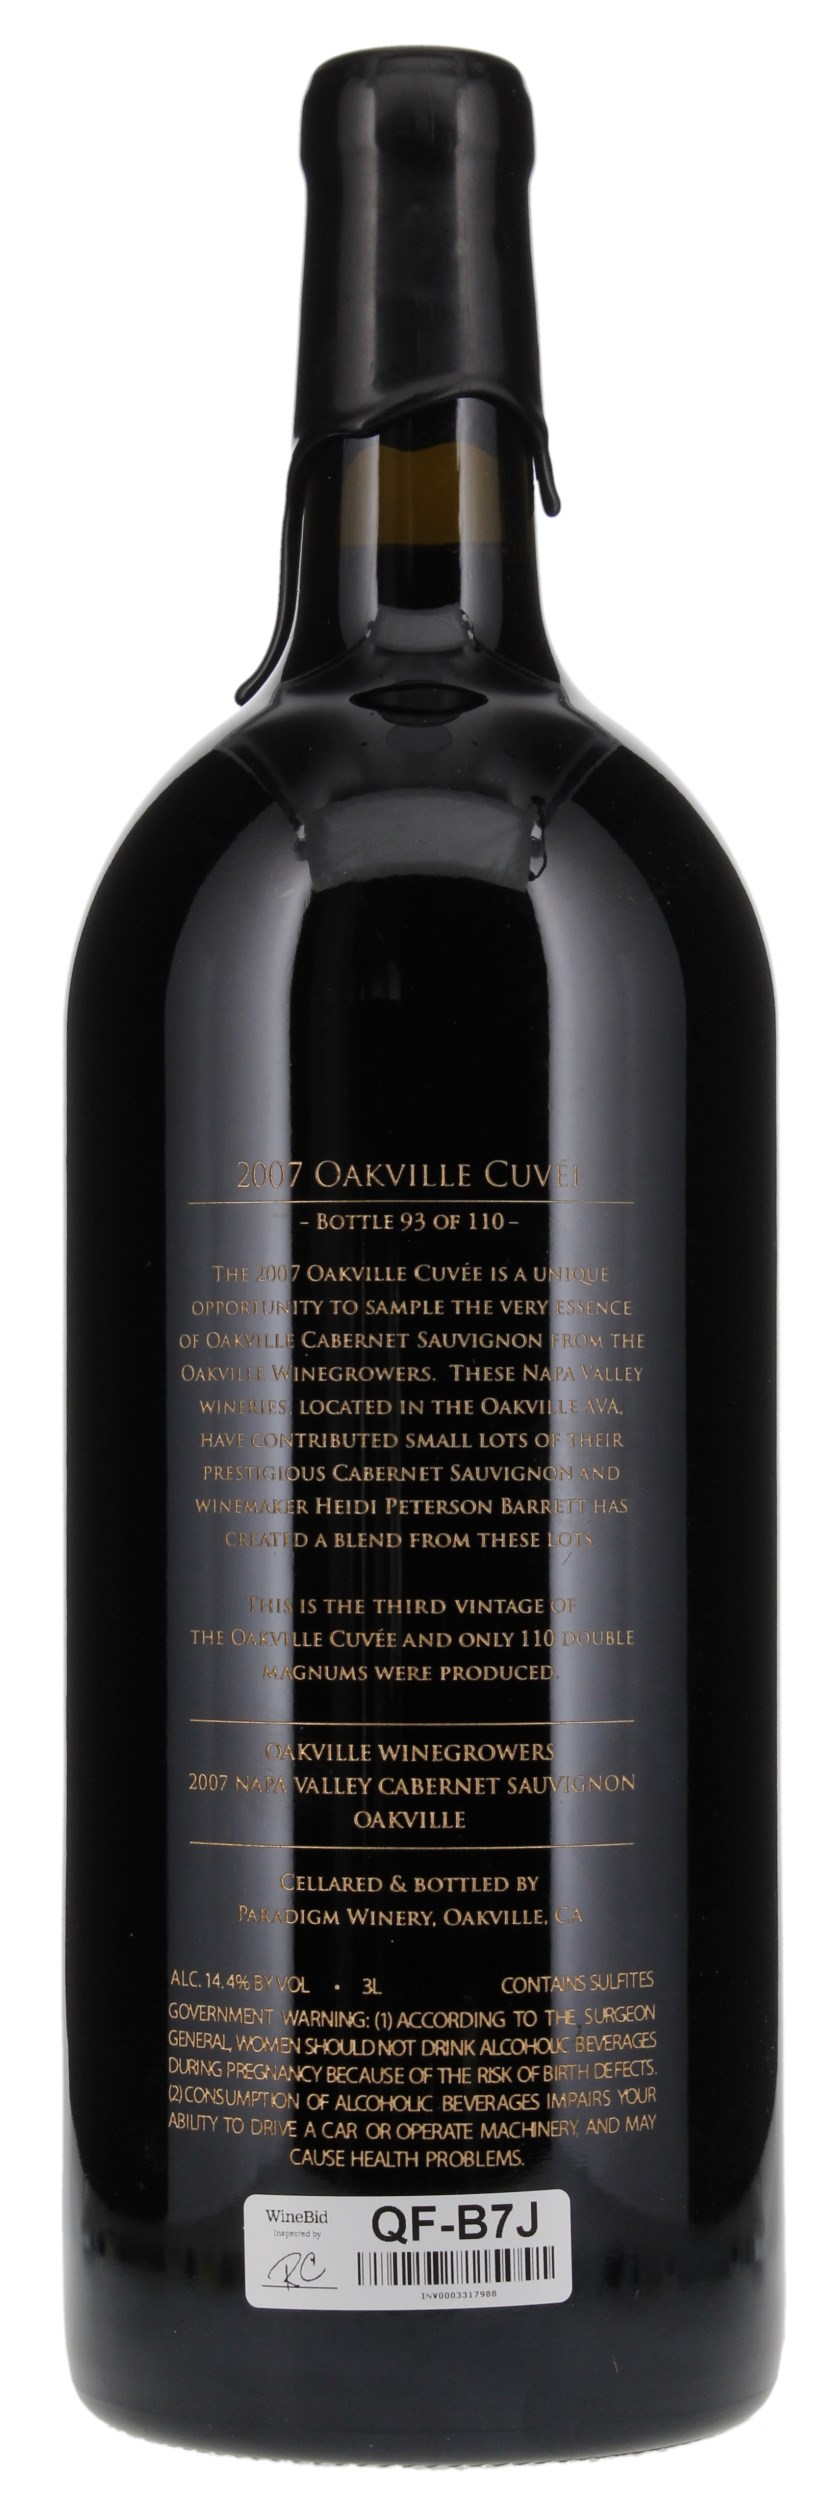 2007 Oakville Winegrowers Oakville Cuvee Cabernet Sauvignon, 3.0ltr